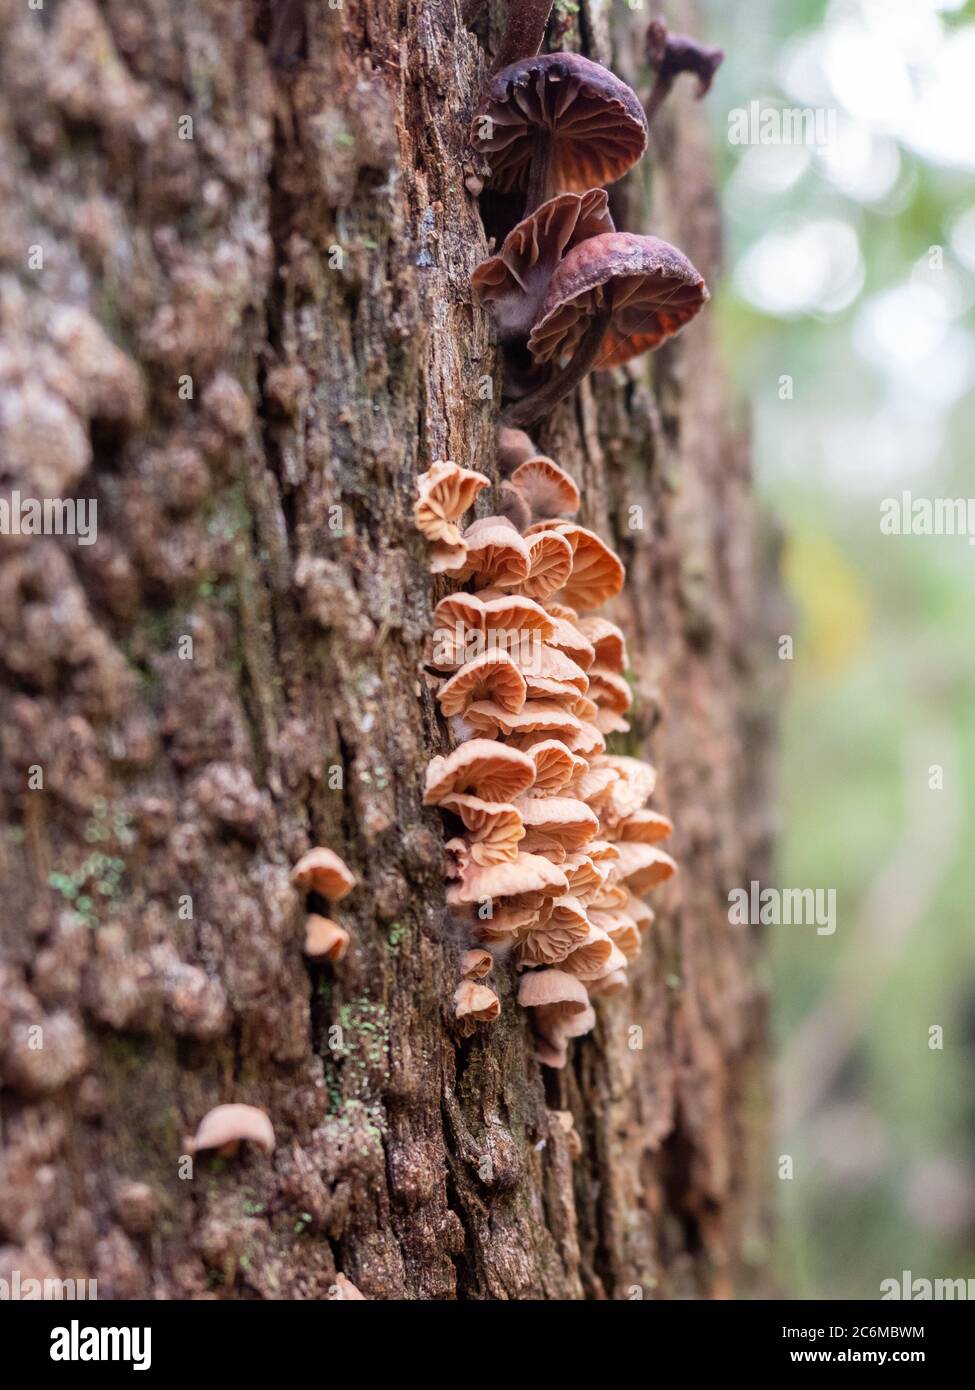 Fungi growing on a tree trunk. Stock Photo